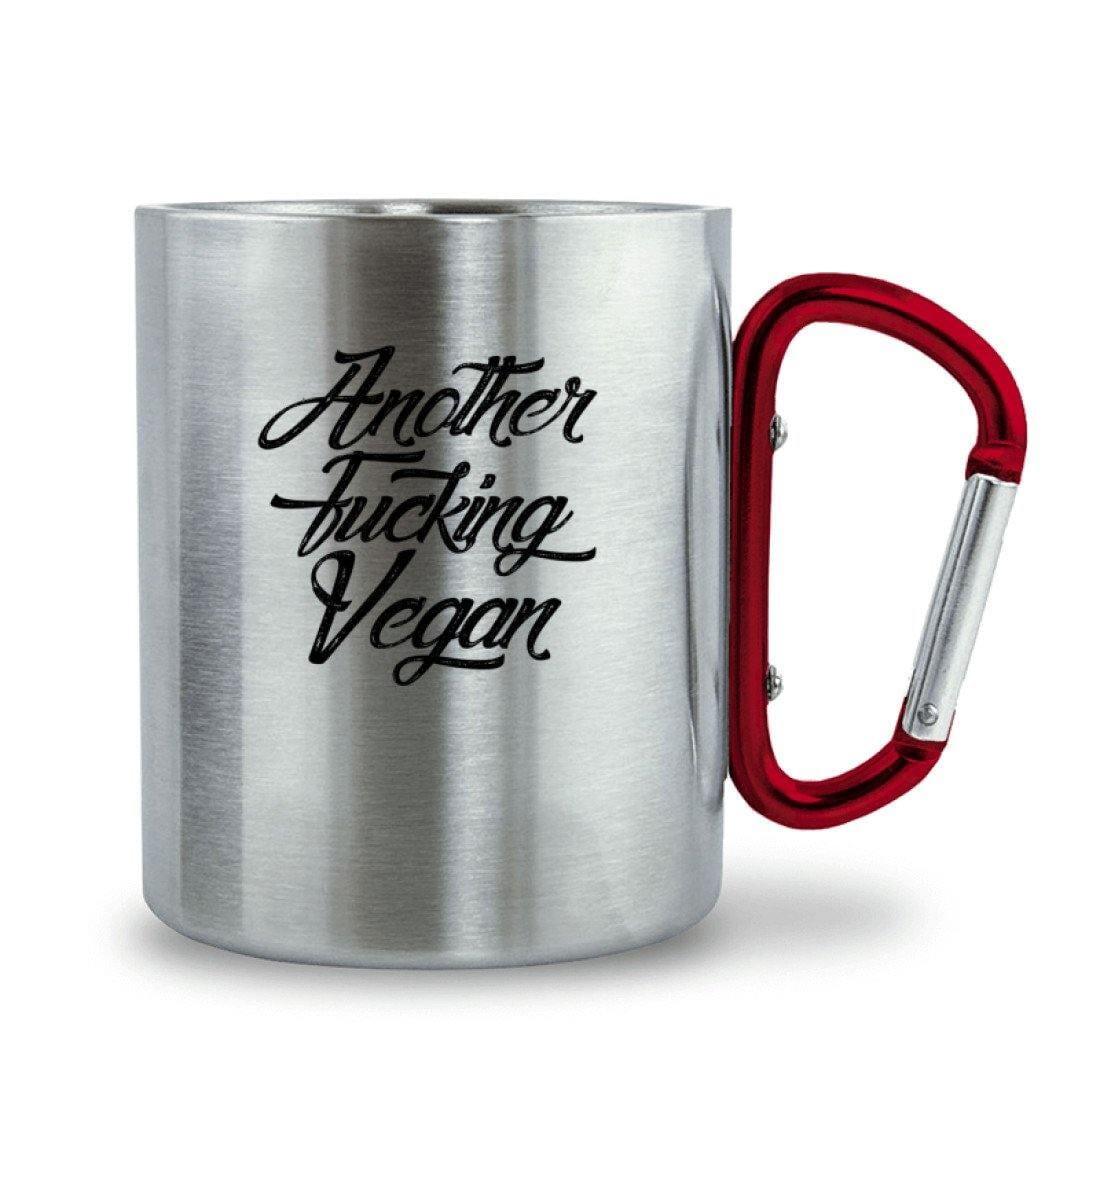 Another fucking vegan - Edelstahltasse mit Karabinergriff - Team Vegan © vegan t shirt